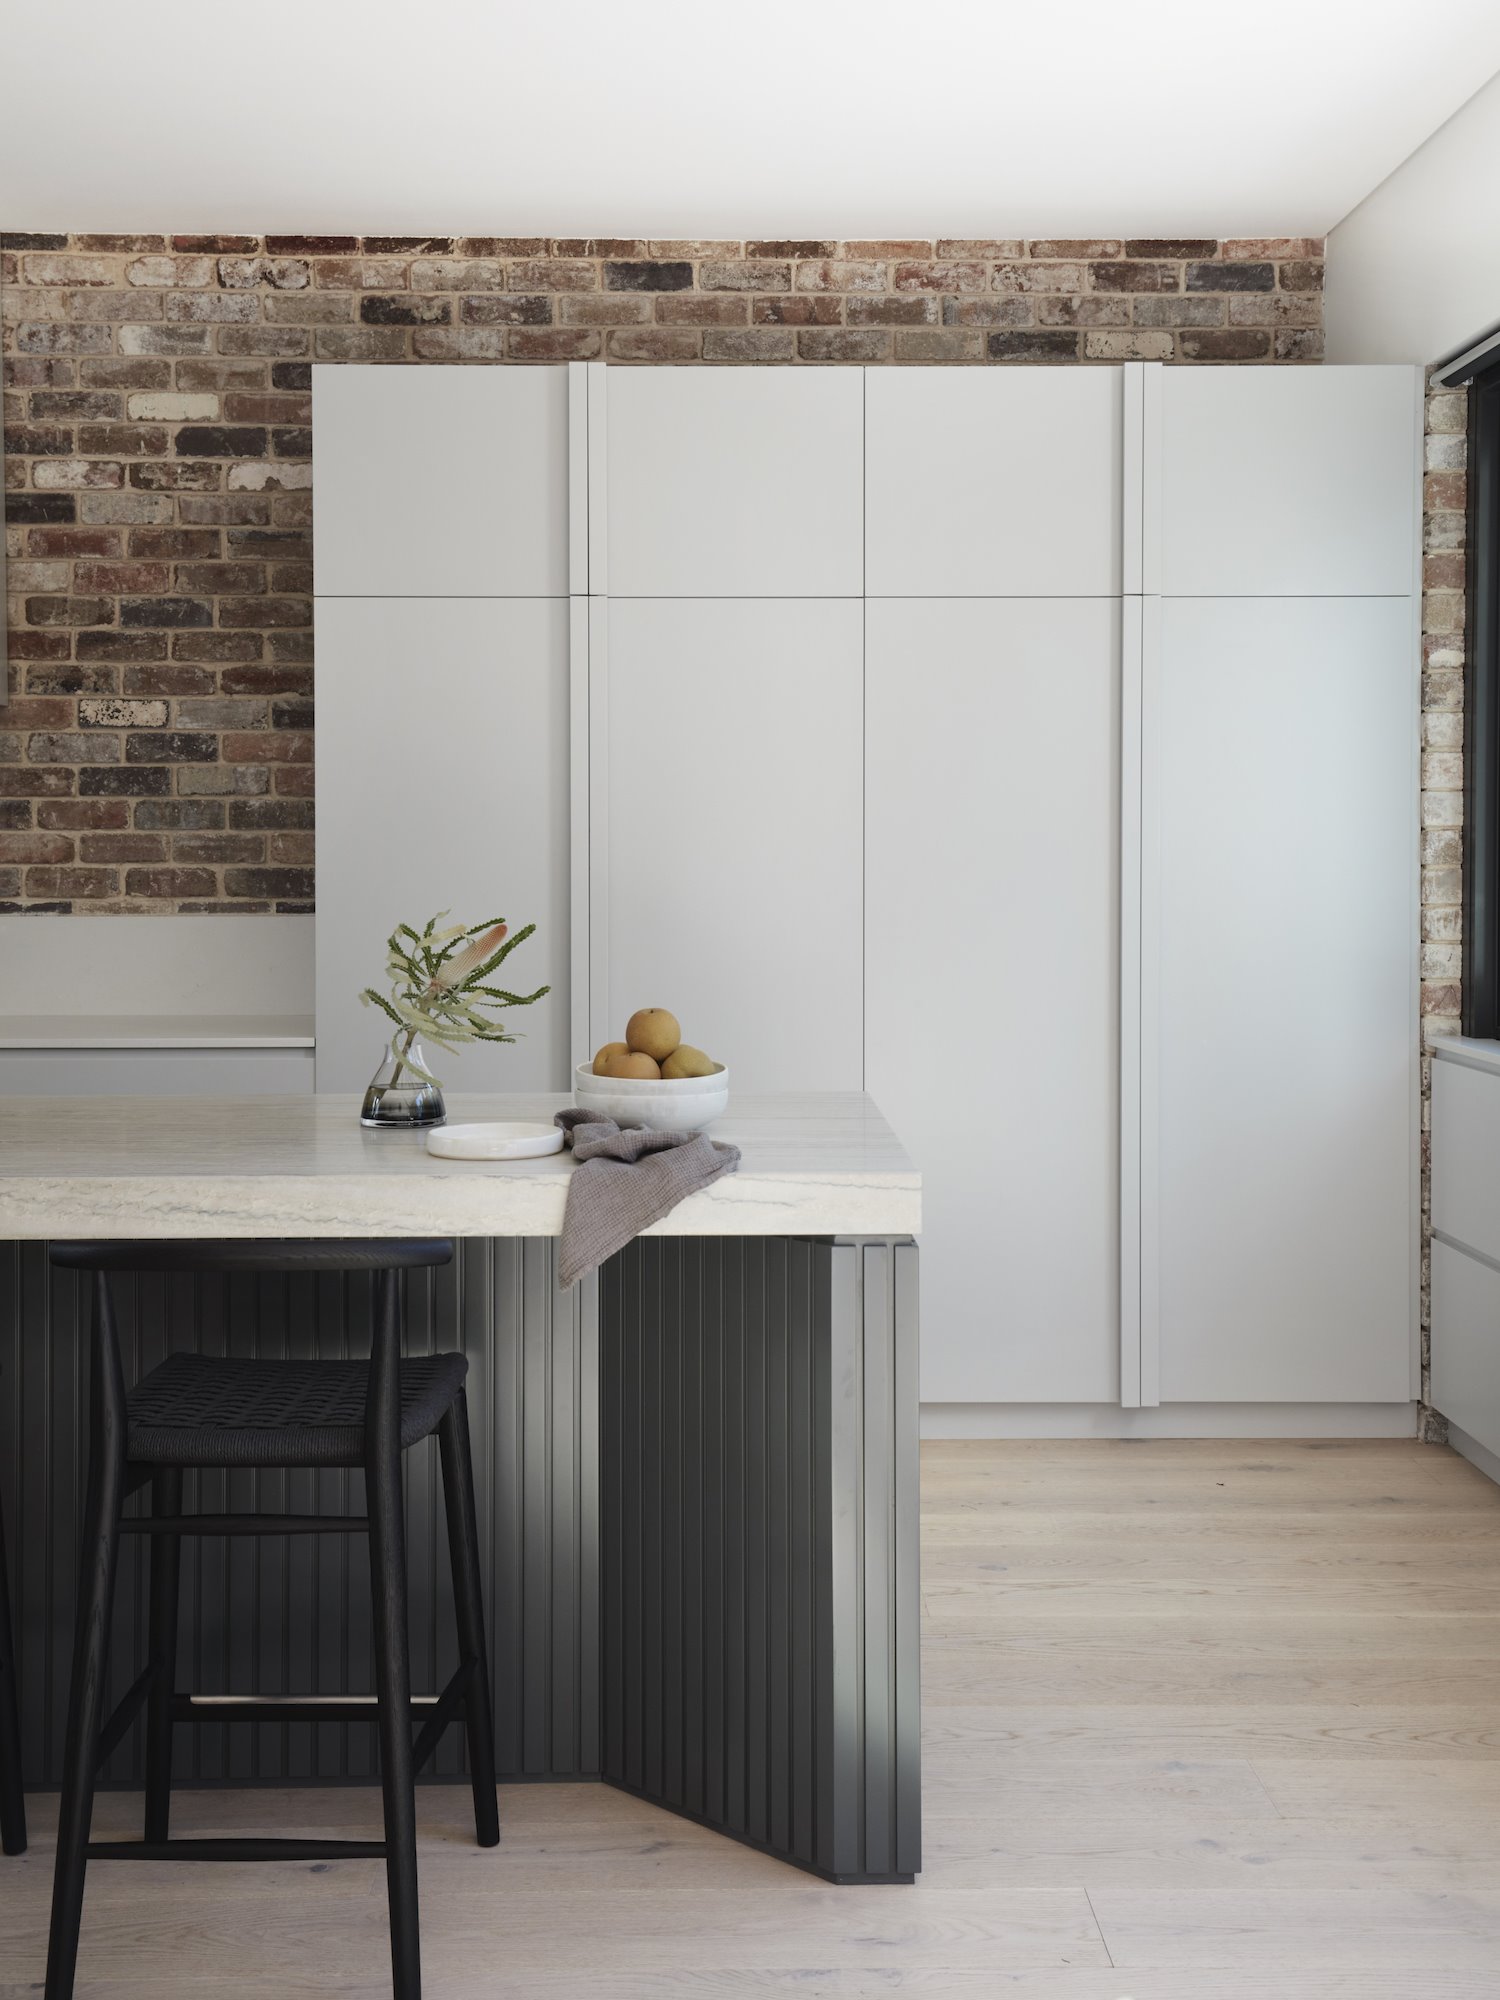 Casa moderna con paredes de ladrillo en Australia cocina con muebles negros